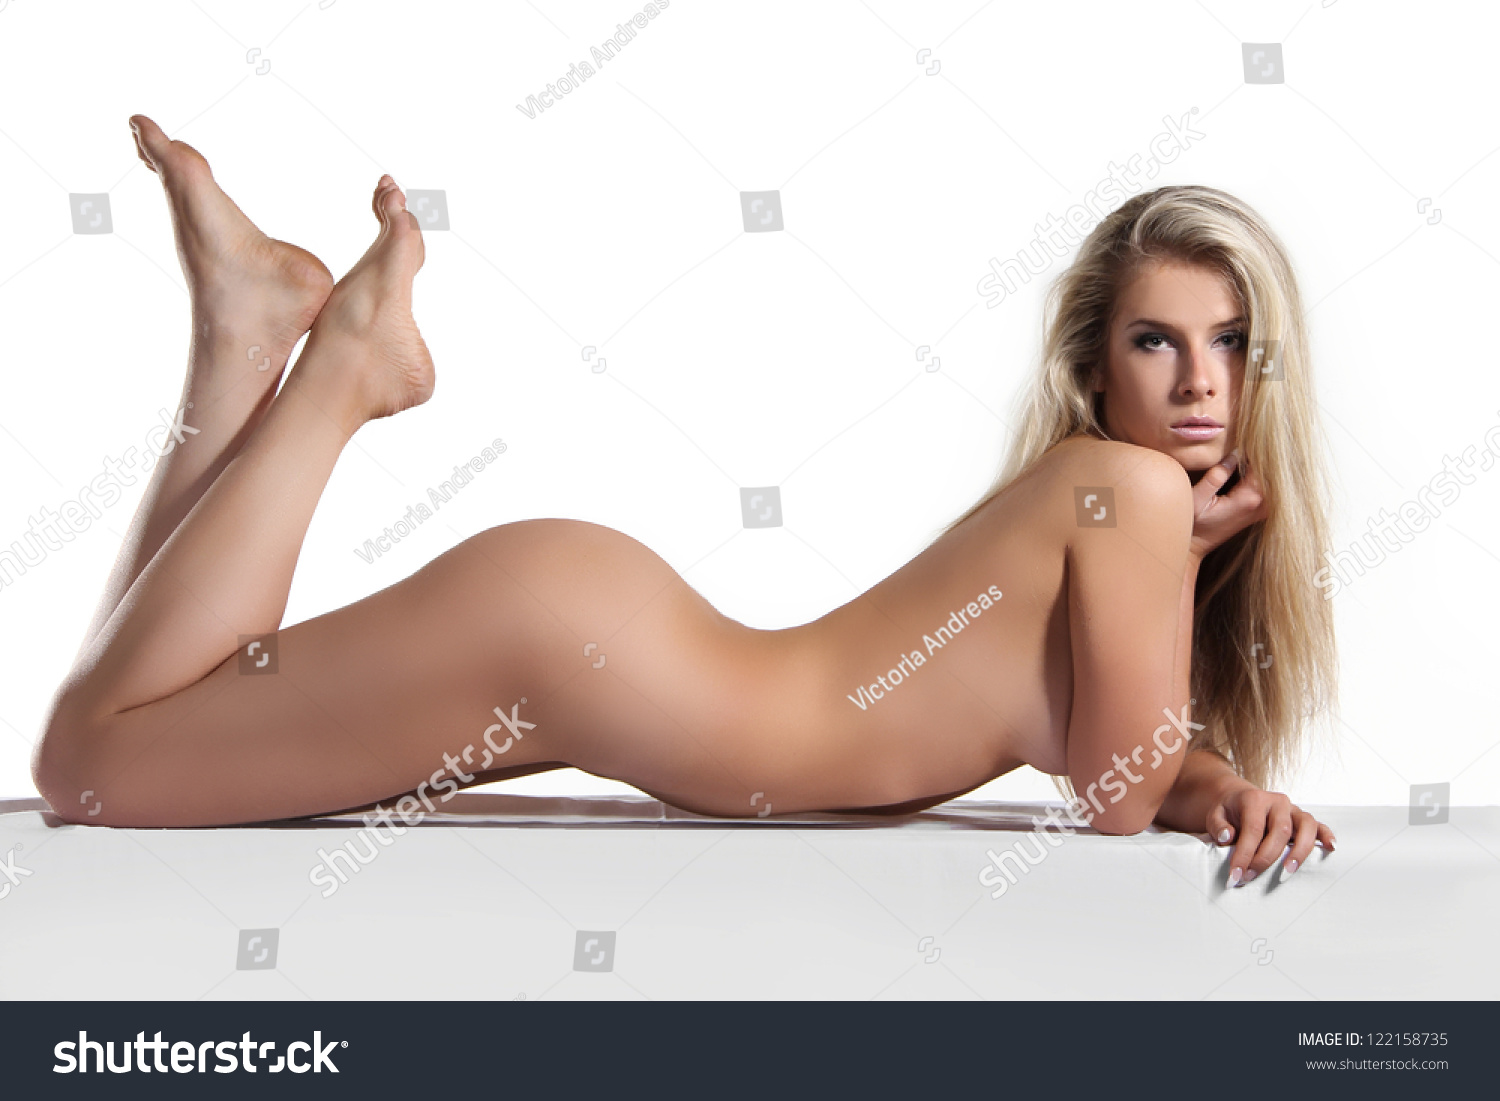 Full Body Women Sex Pictures 10